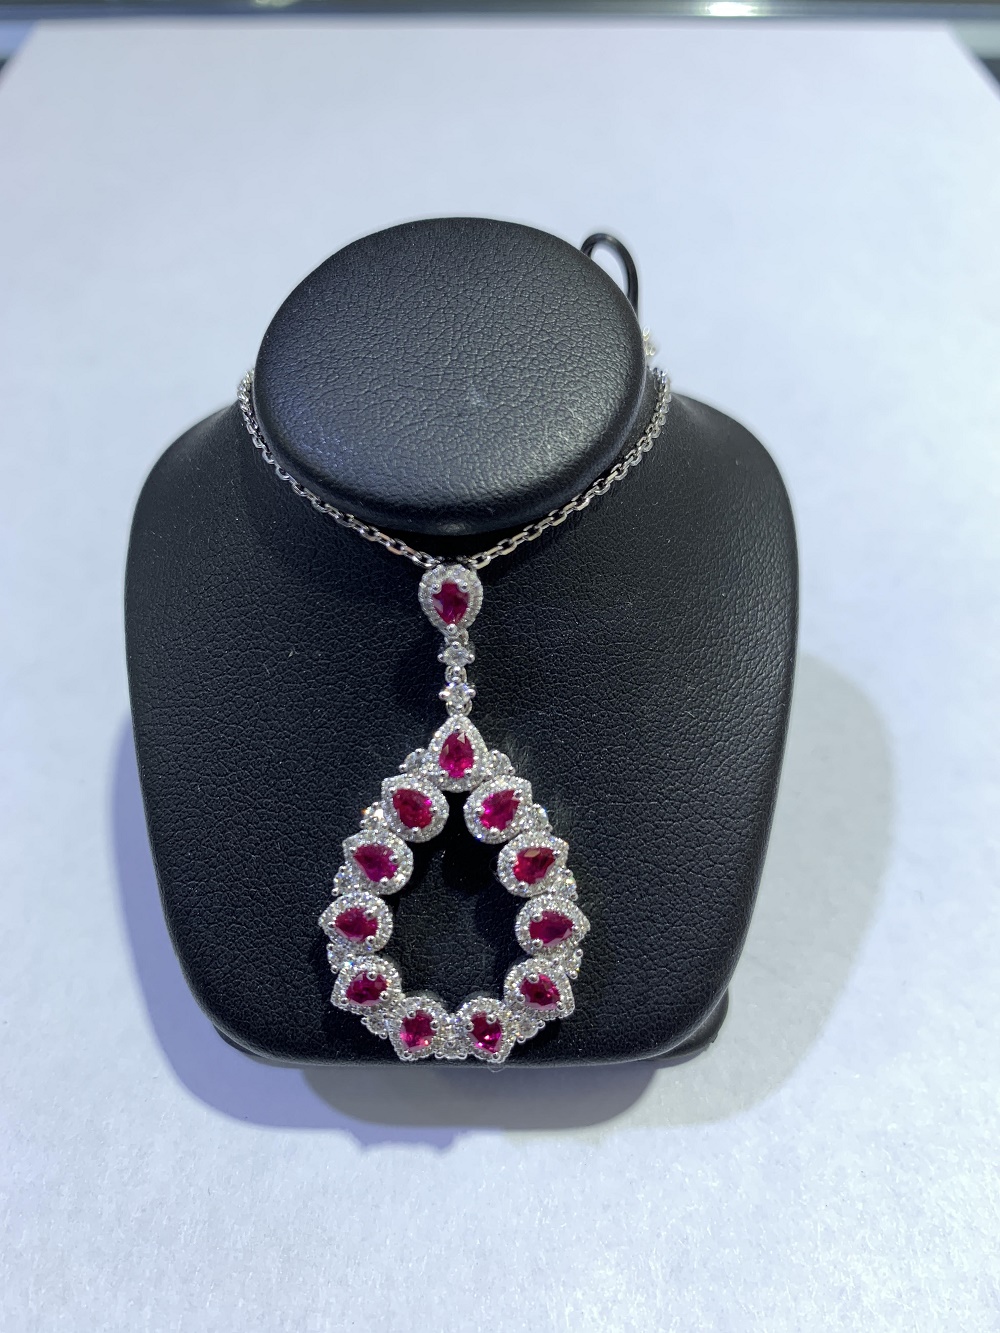 18kt white gold diamond and ruby necklace - Woodbridge Jewelery Exchange